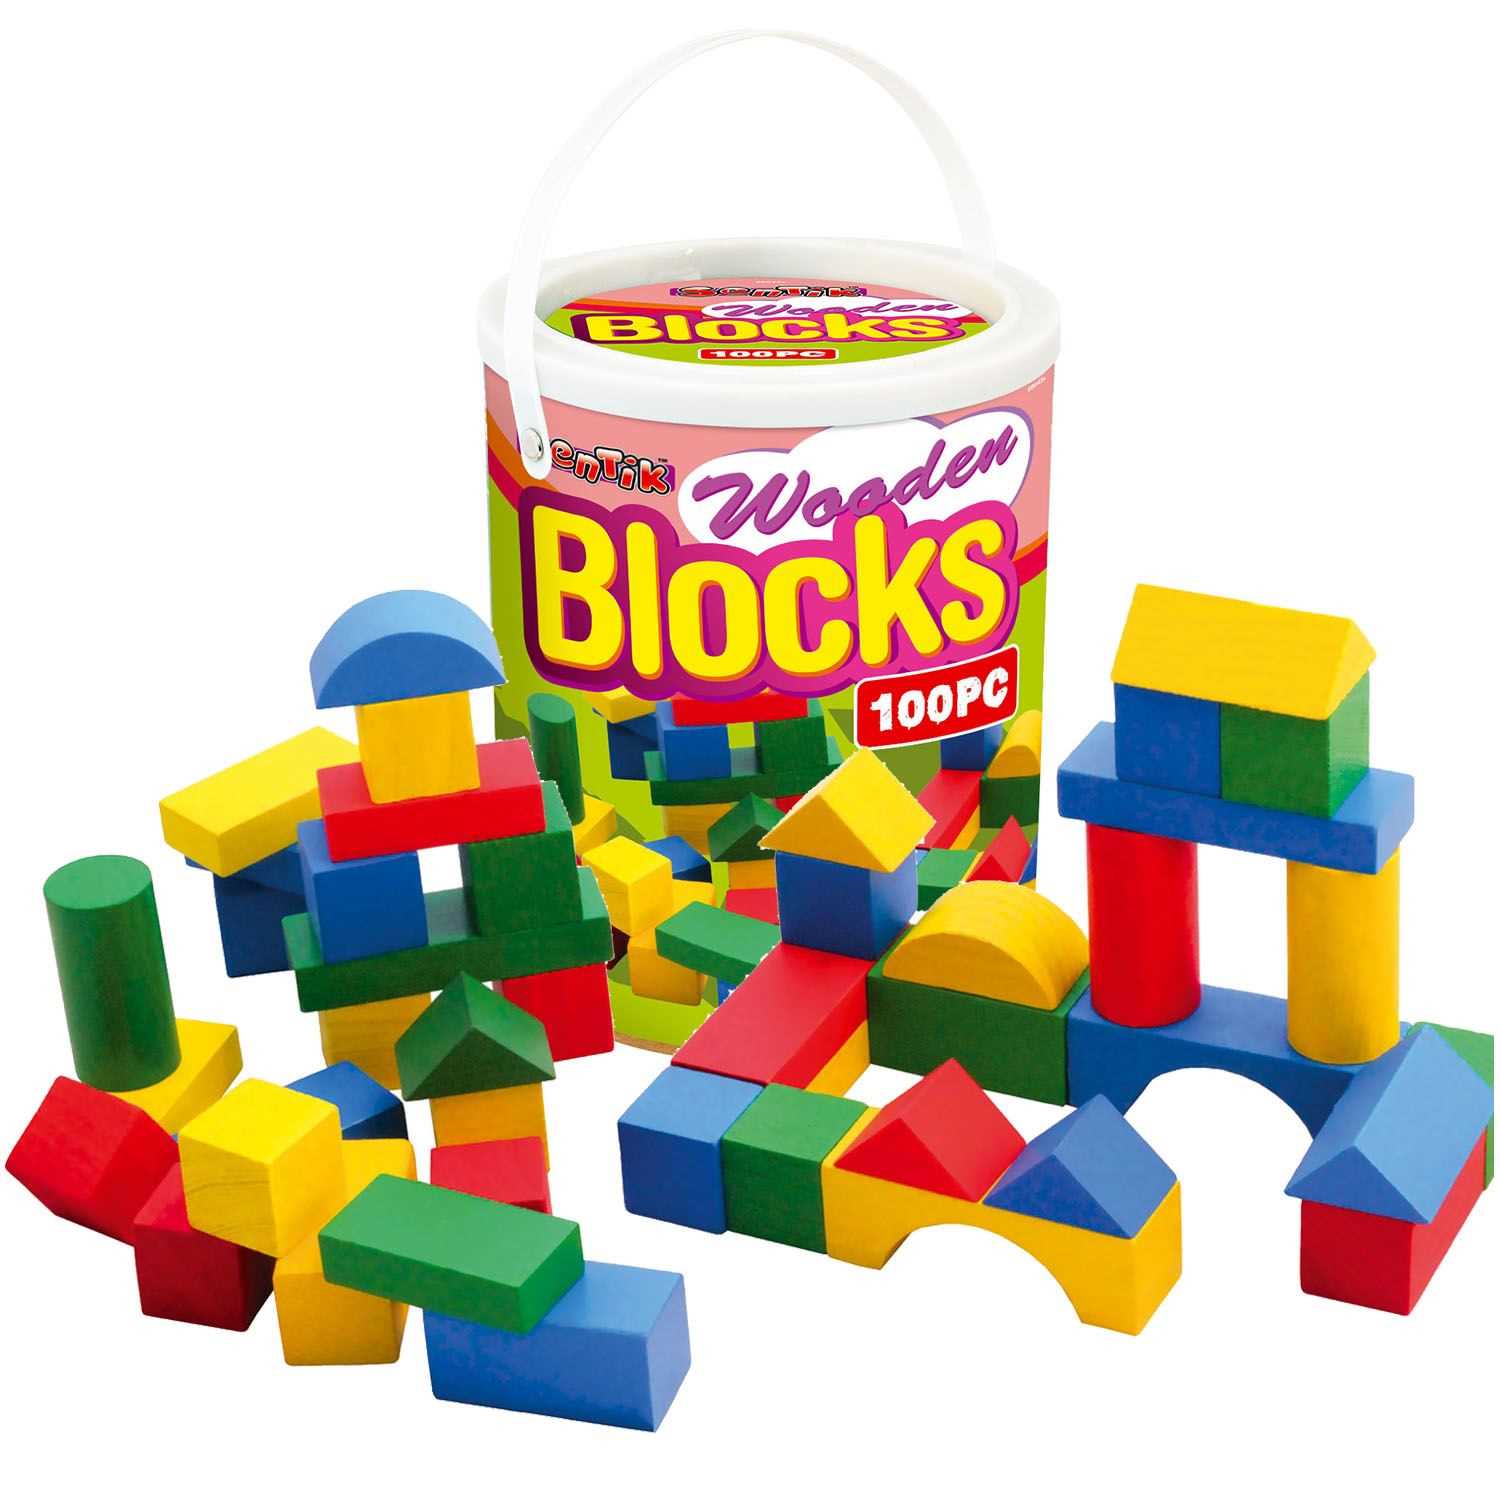 100 Bricks in a Tub Wooden Construction Building Blocks Bricks Children's Wood Toys Pieces Xmas Gift